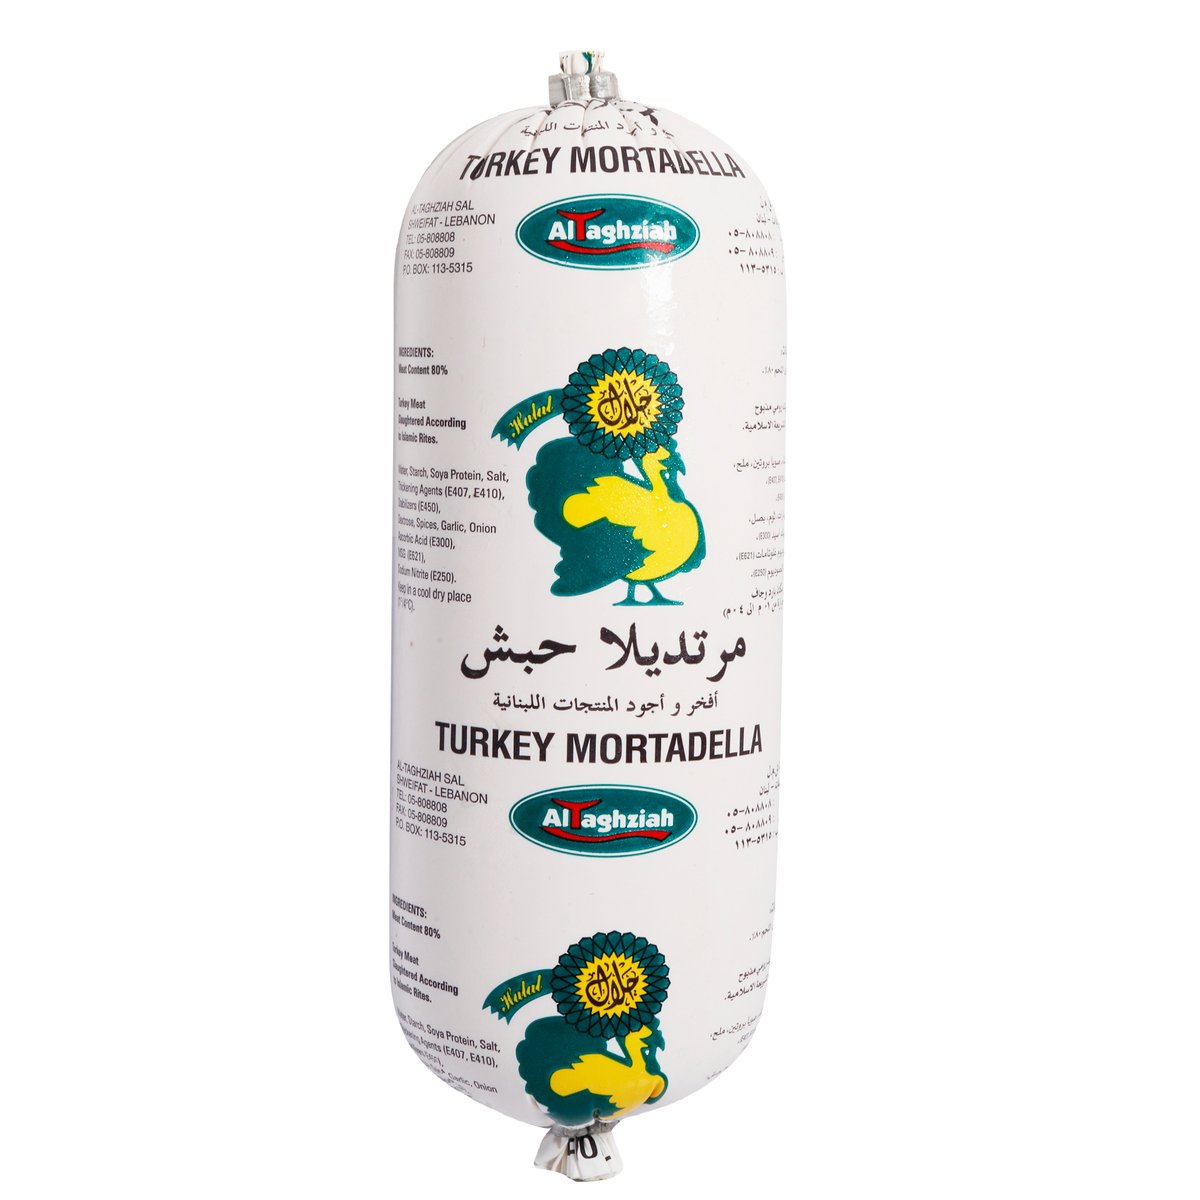 Al Taghziah Turkey Mortadella 500g